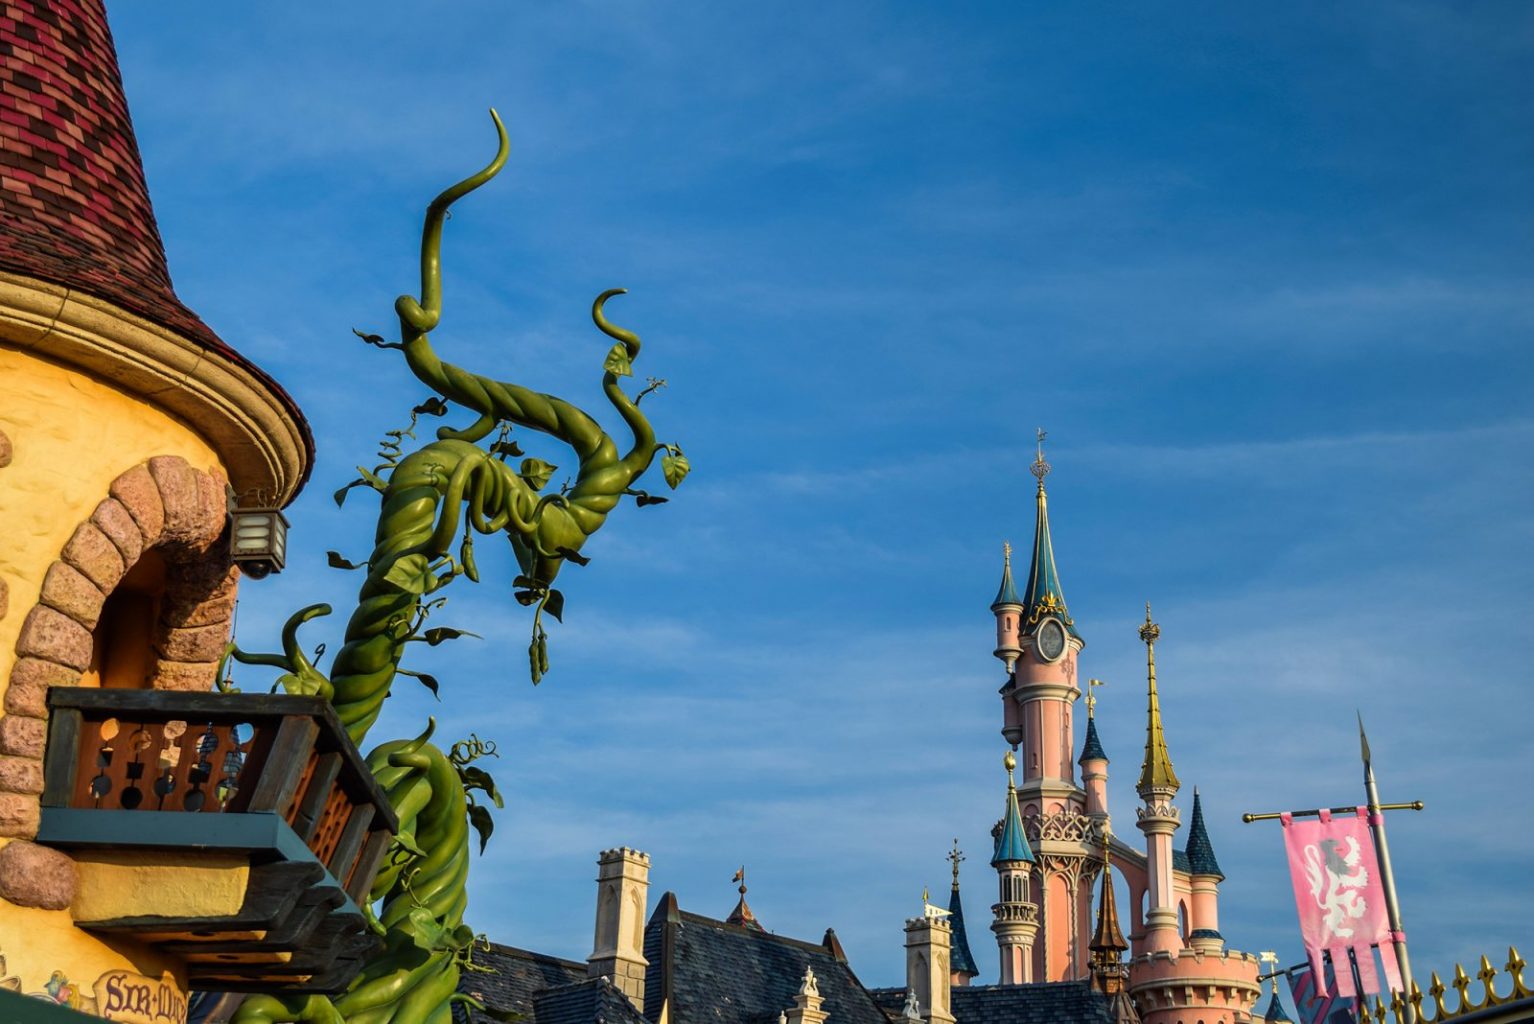 Disneyland Paris Annual Pass Castle shot with beanstalk in foreground